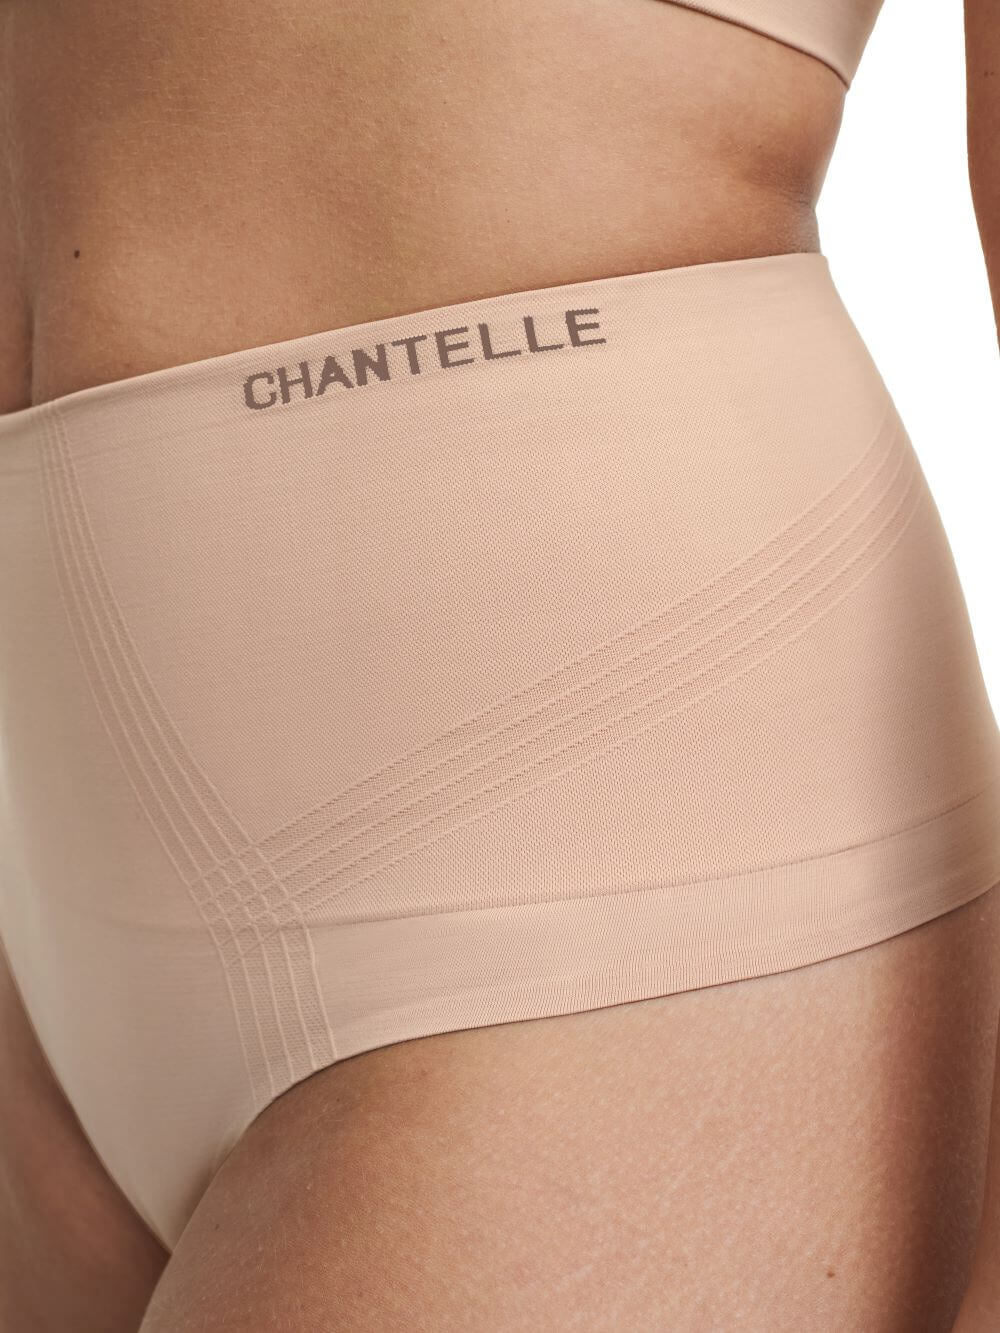 145089 | Chantelle - Smooth Comfort Hud.